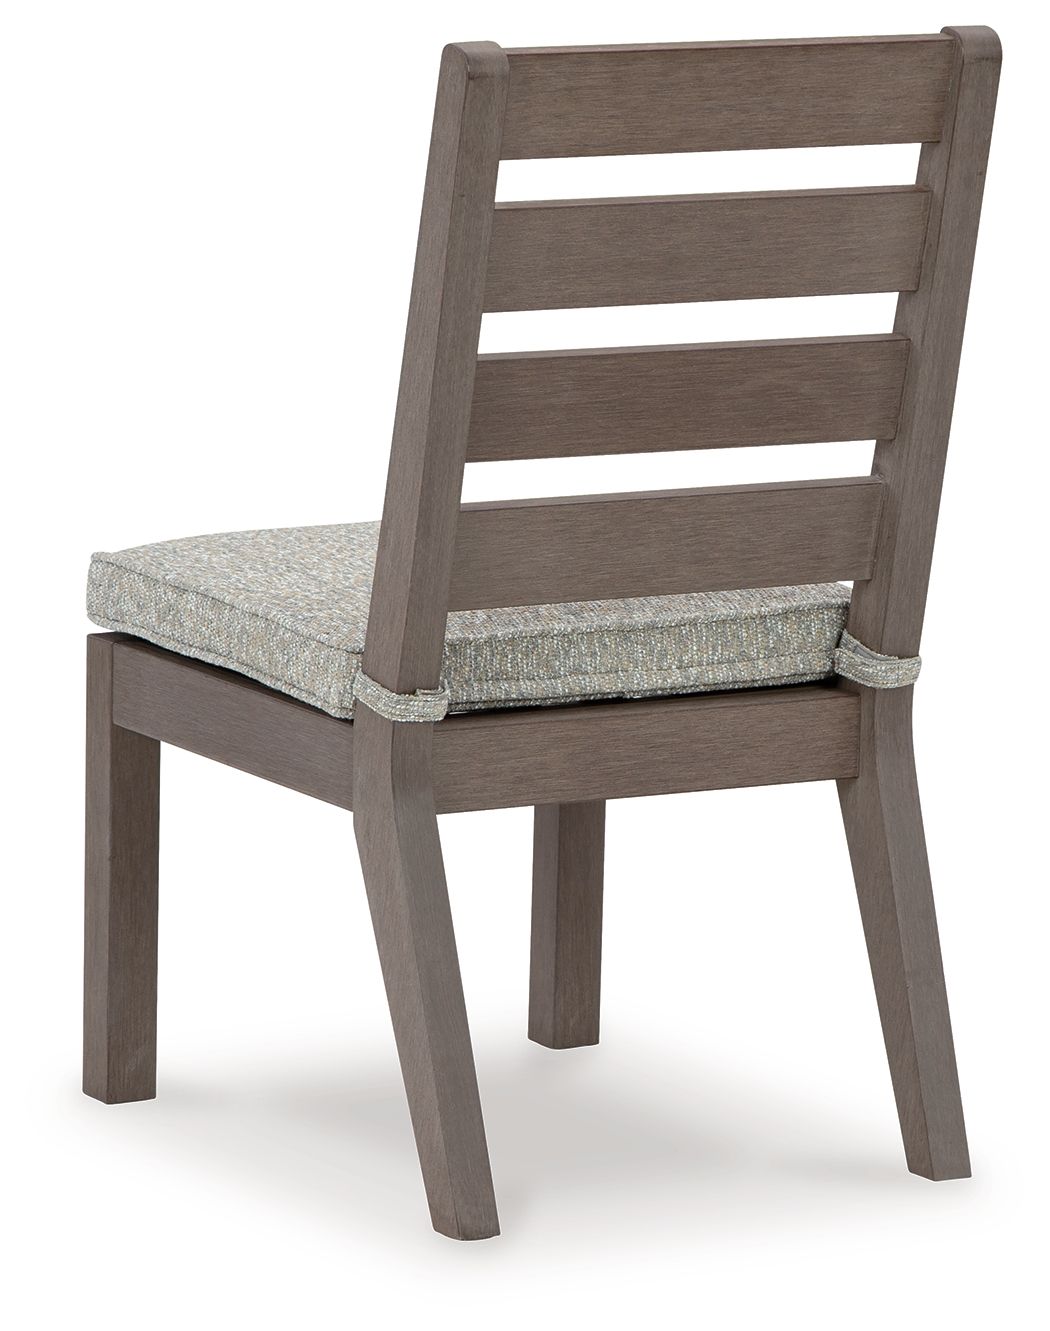 Hillside Barn - Gray / Brown - Chair With Cushion (Set of 2) - 5th Avenue Furniture